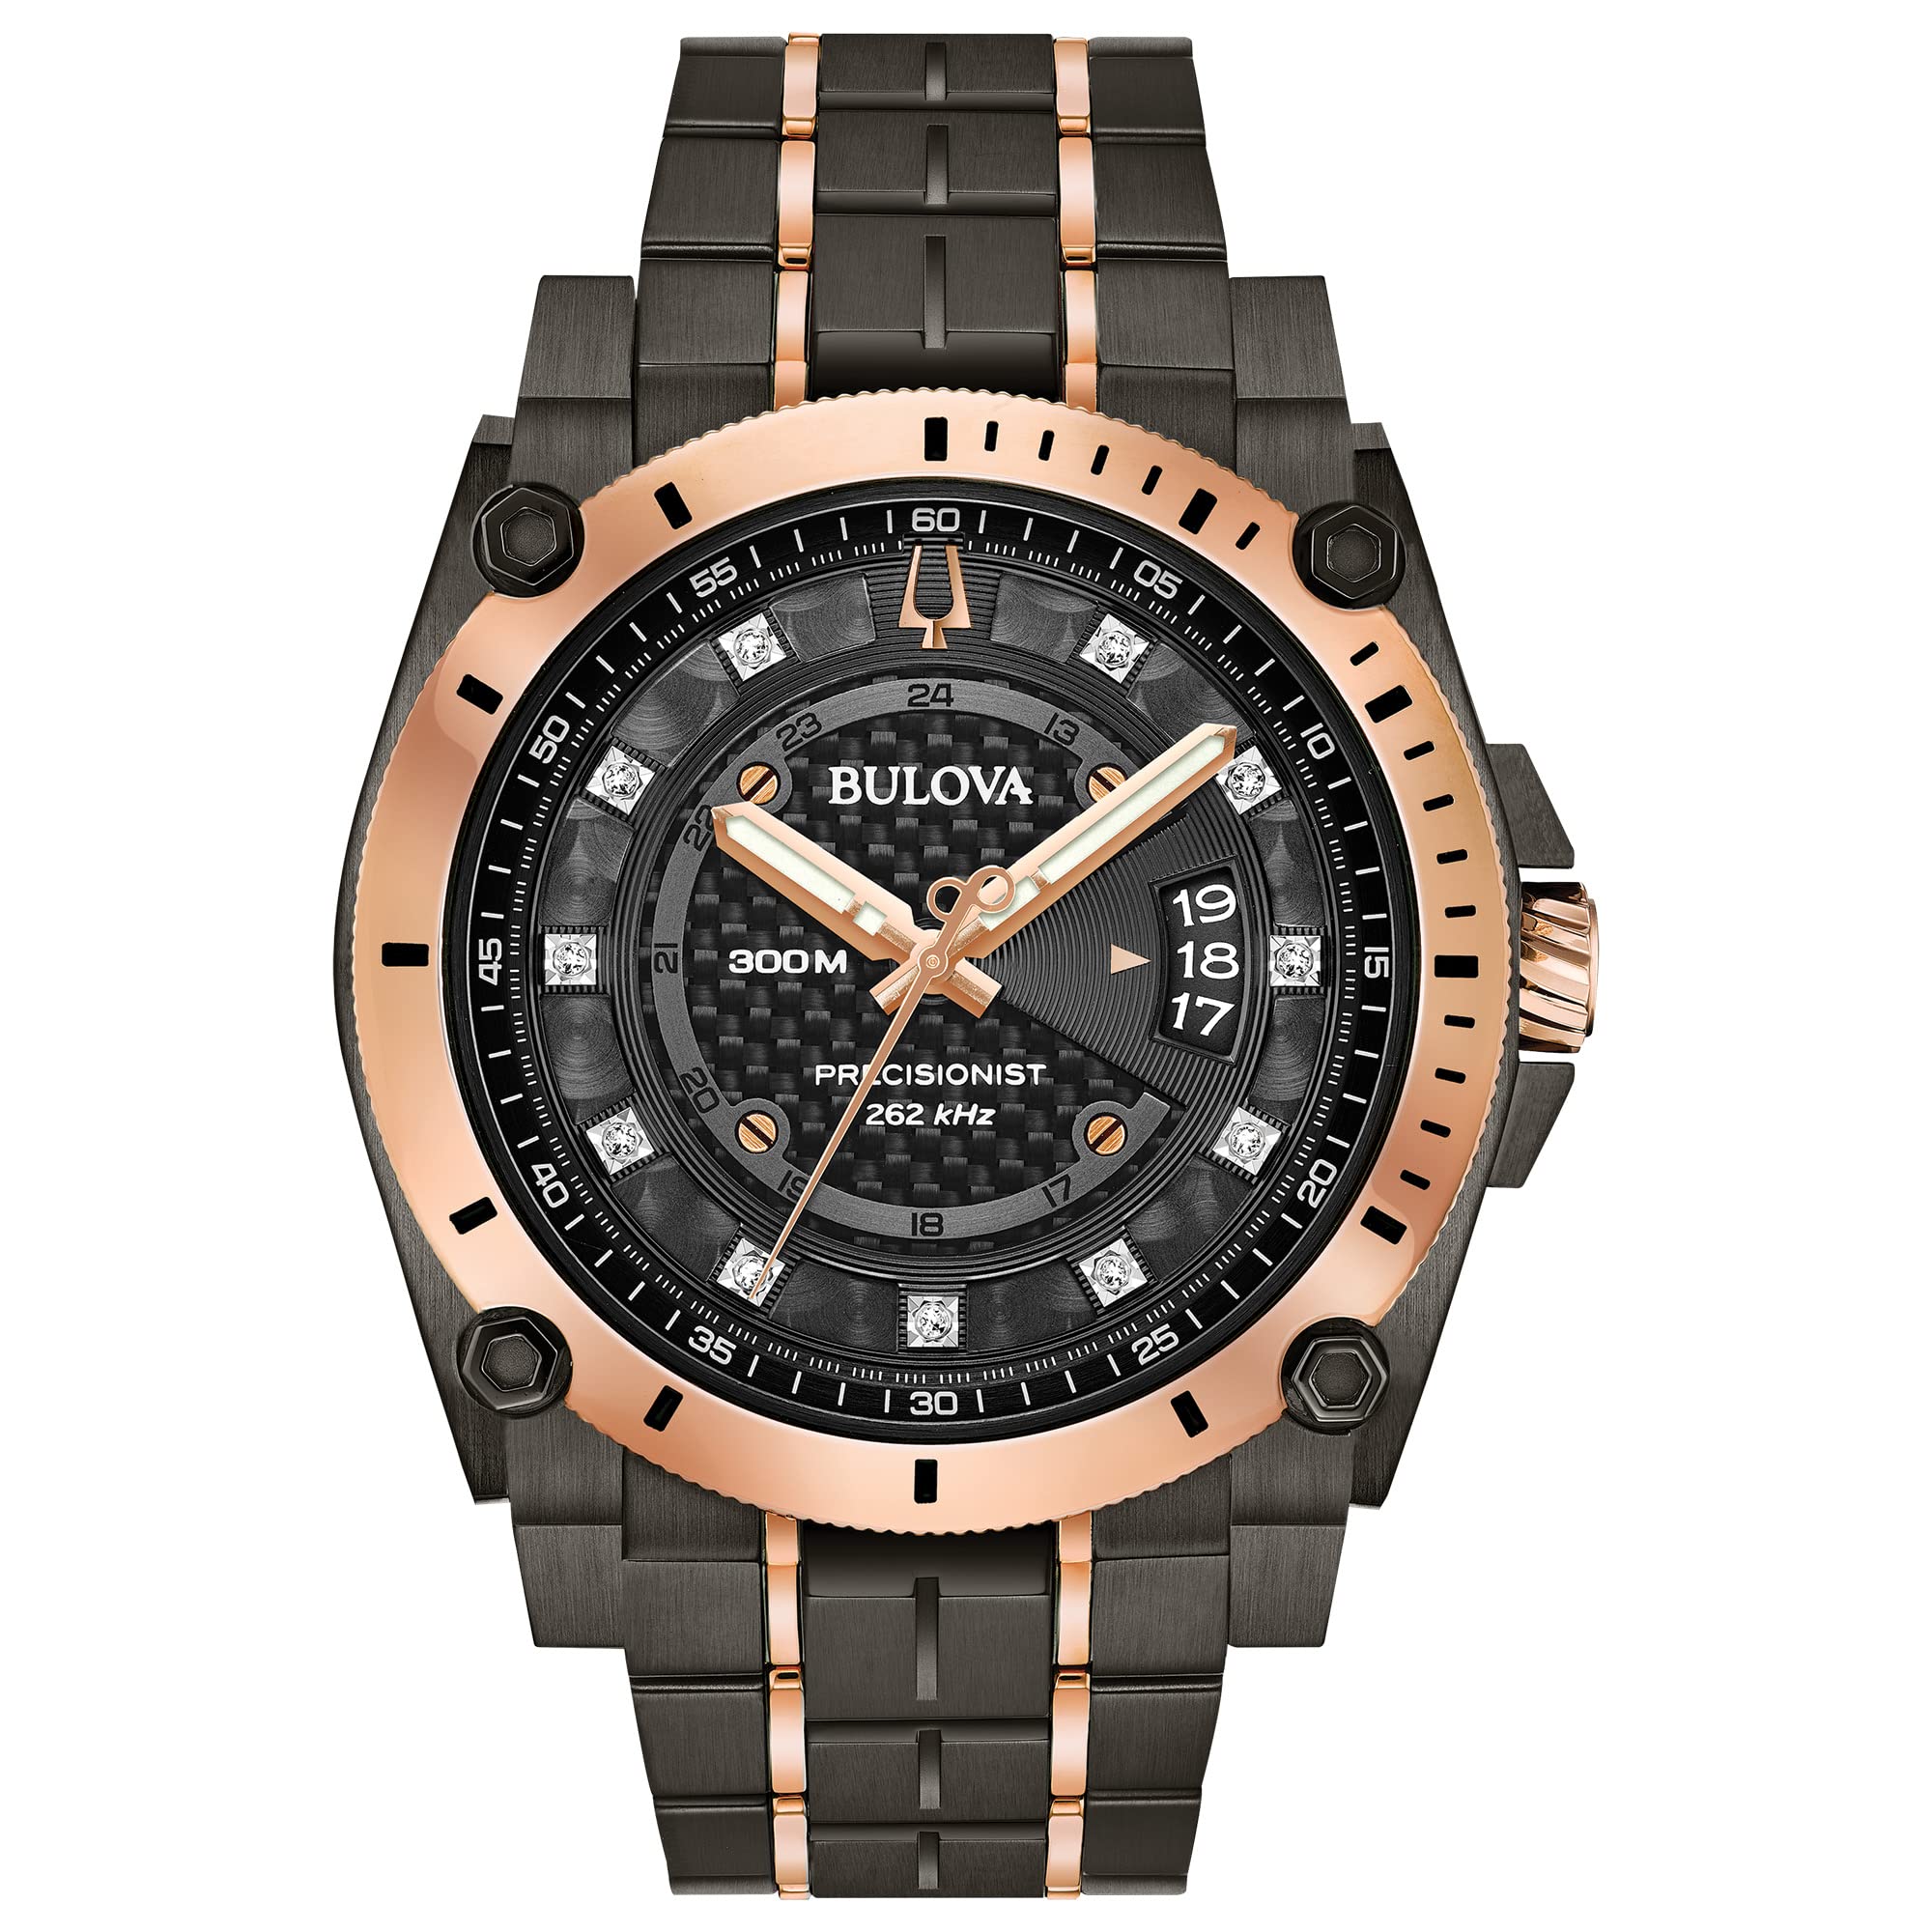 Bulova Men's Precisionist Quartz Watch